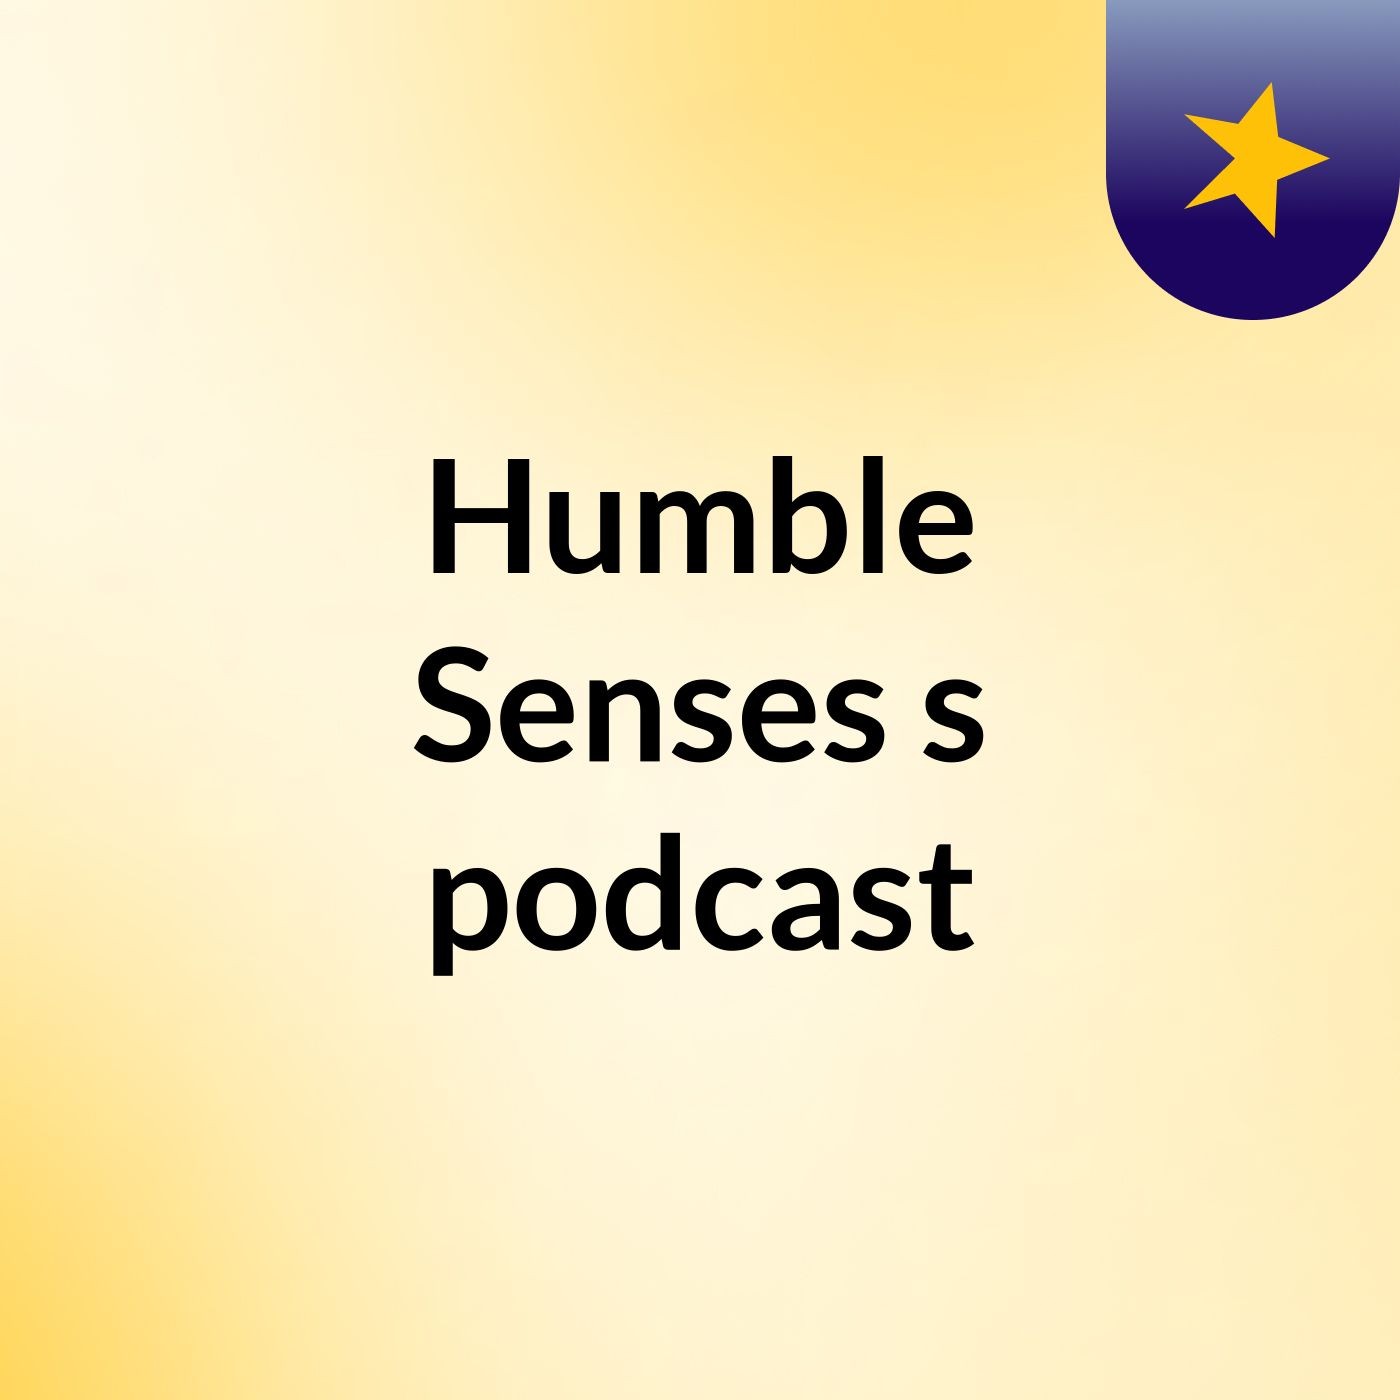 Humble Senses's podcast